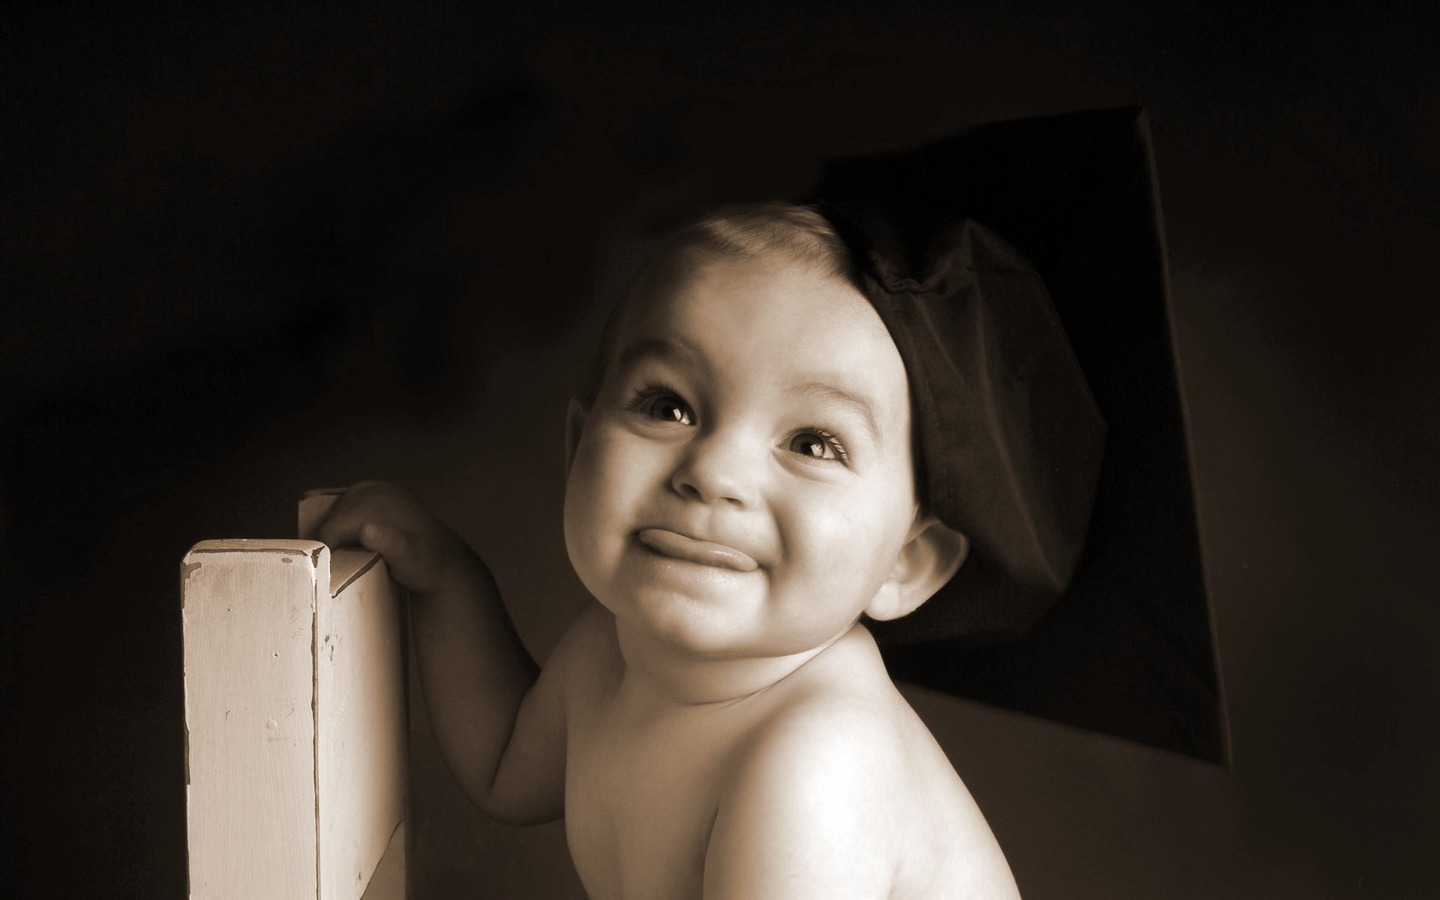 Fonds d'écran mignon de bébé (2) #18 - 1440x900